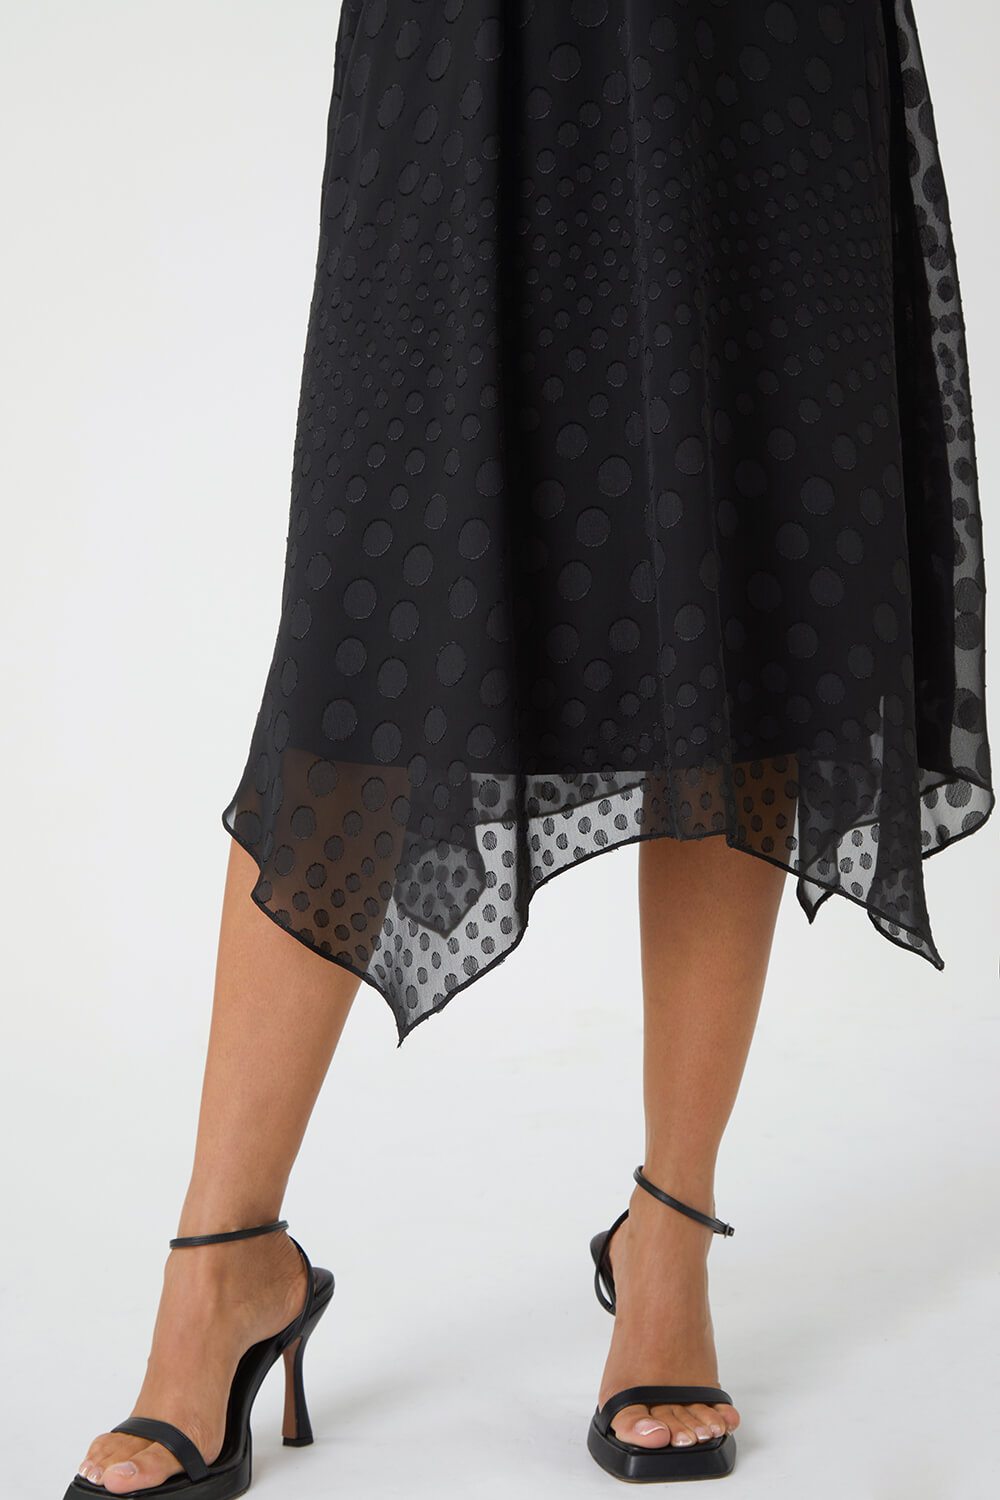 Black Polka Dot Twist Detail Chiffon Dress, Image 5 of 5